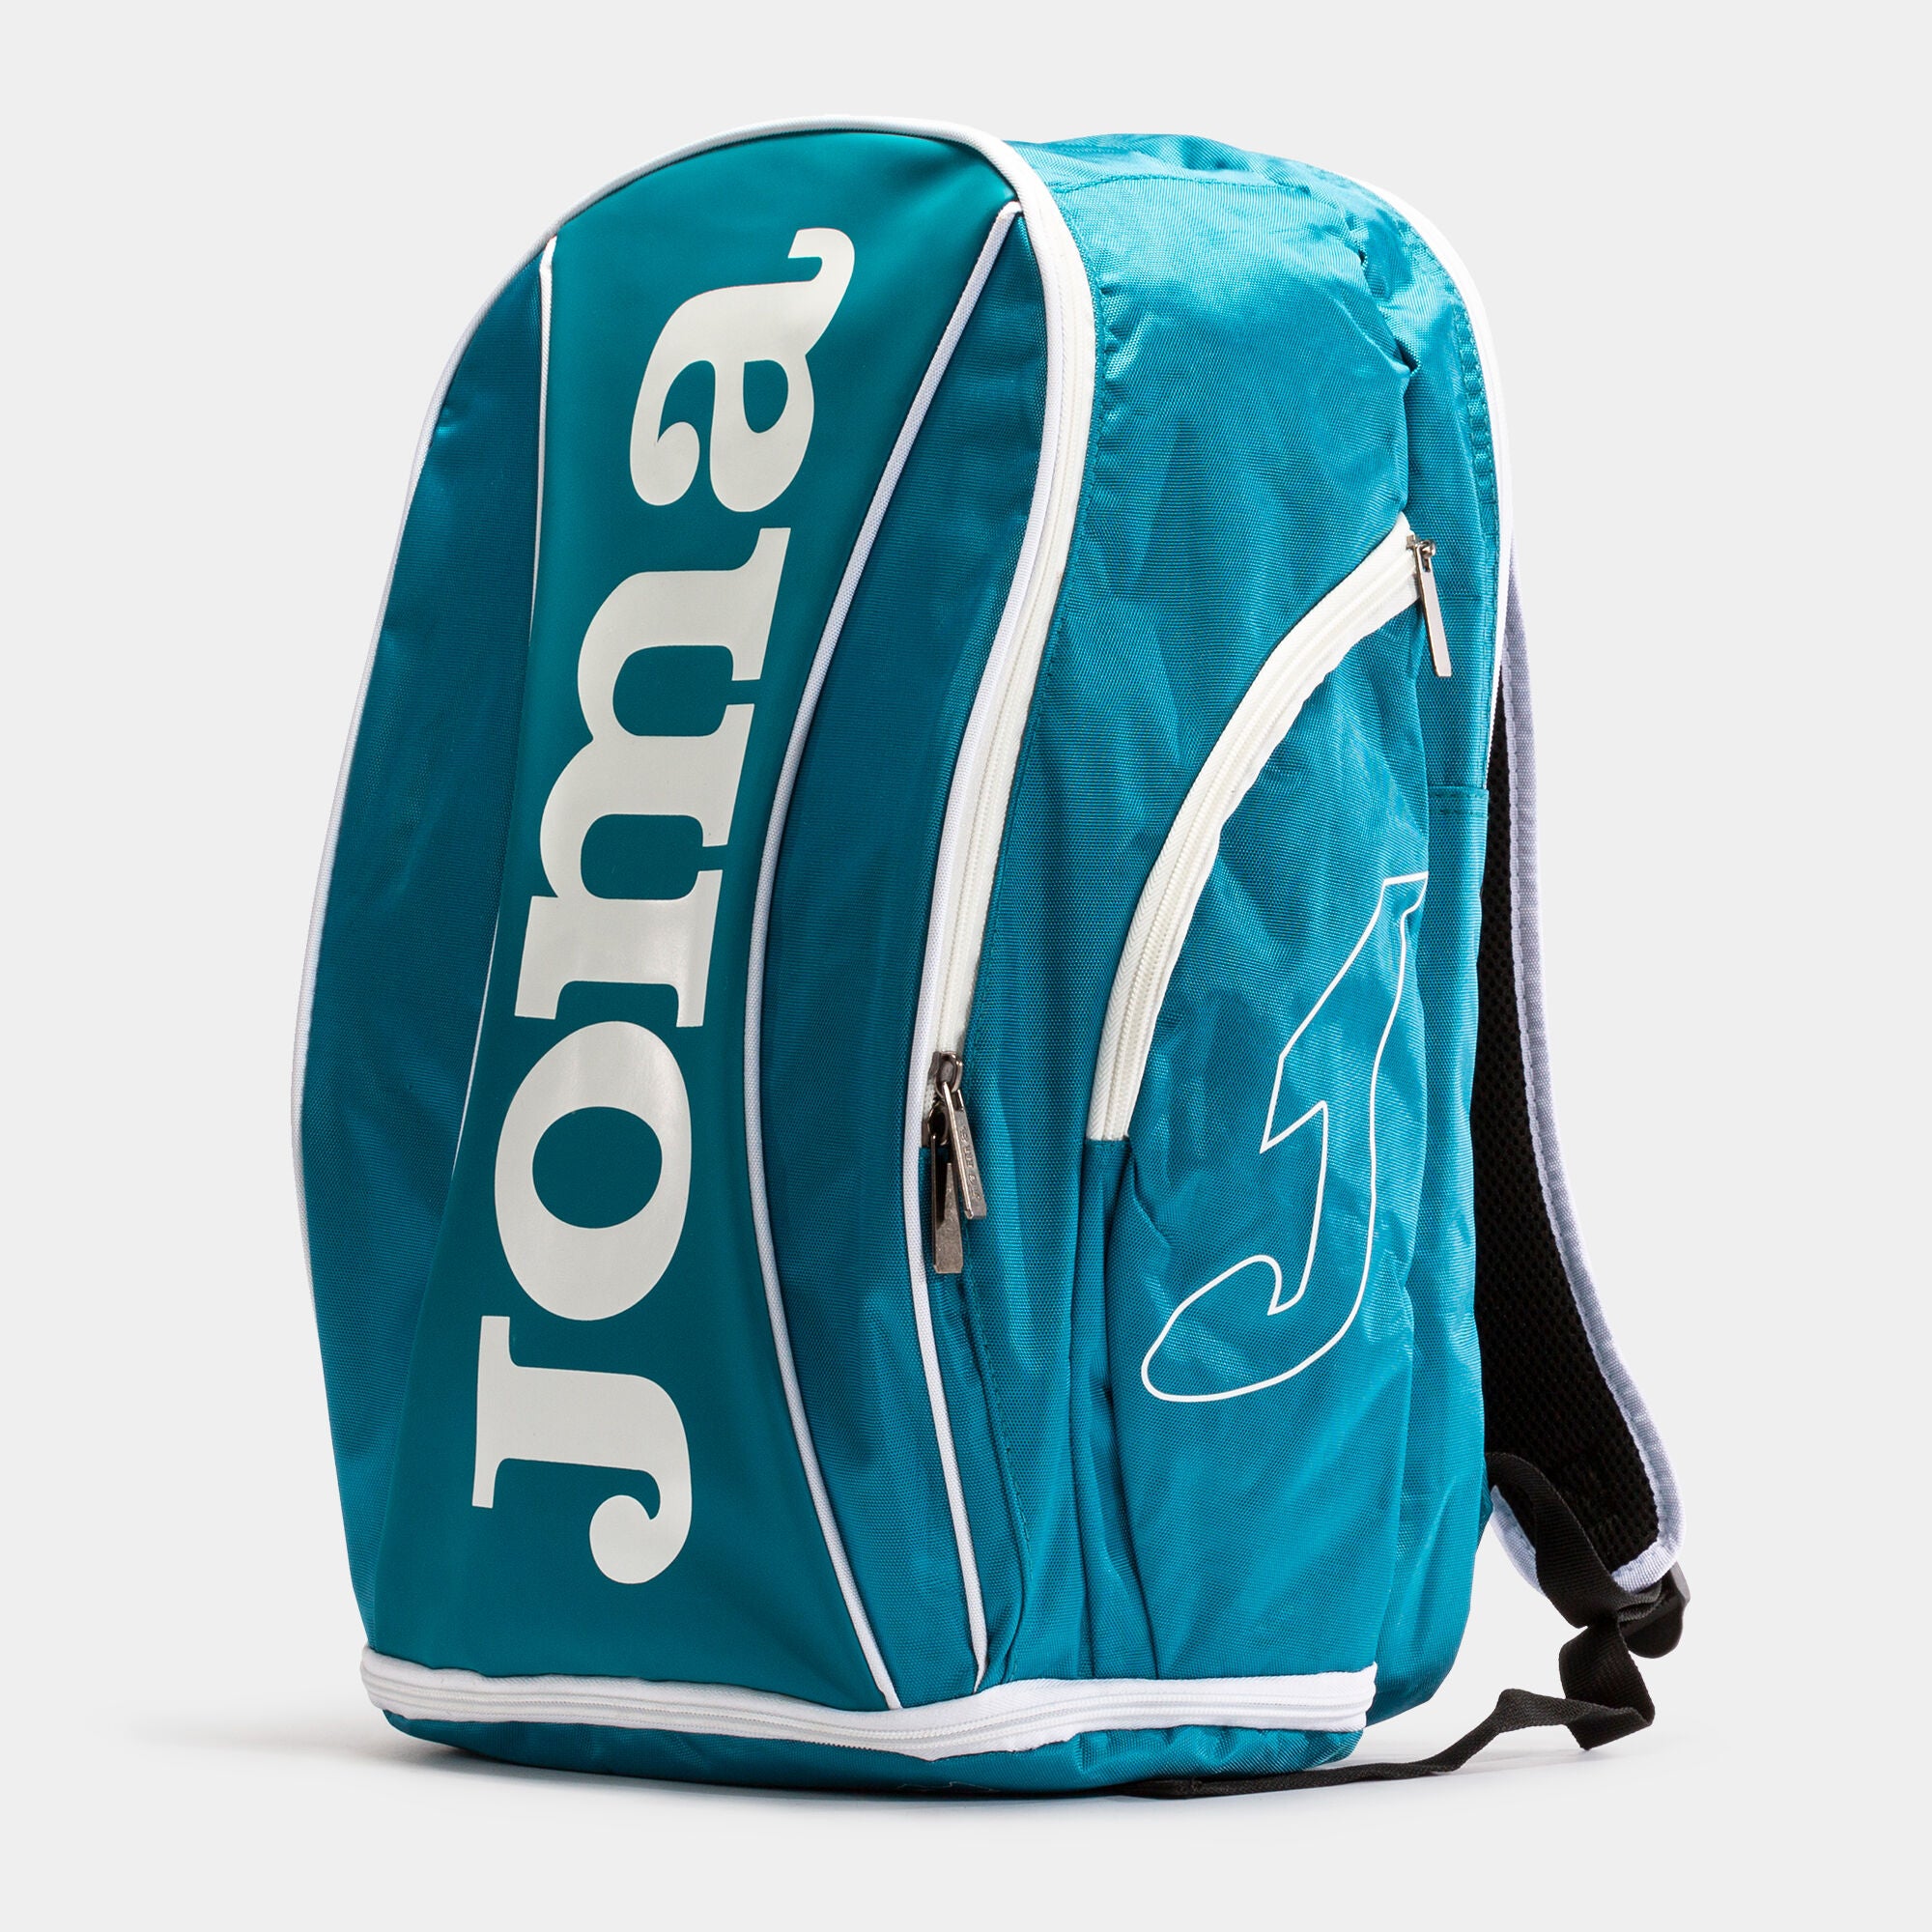 Joma Open backpack